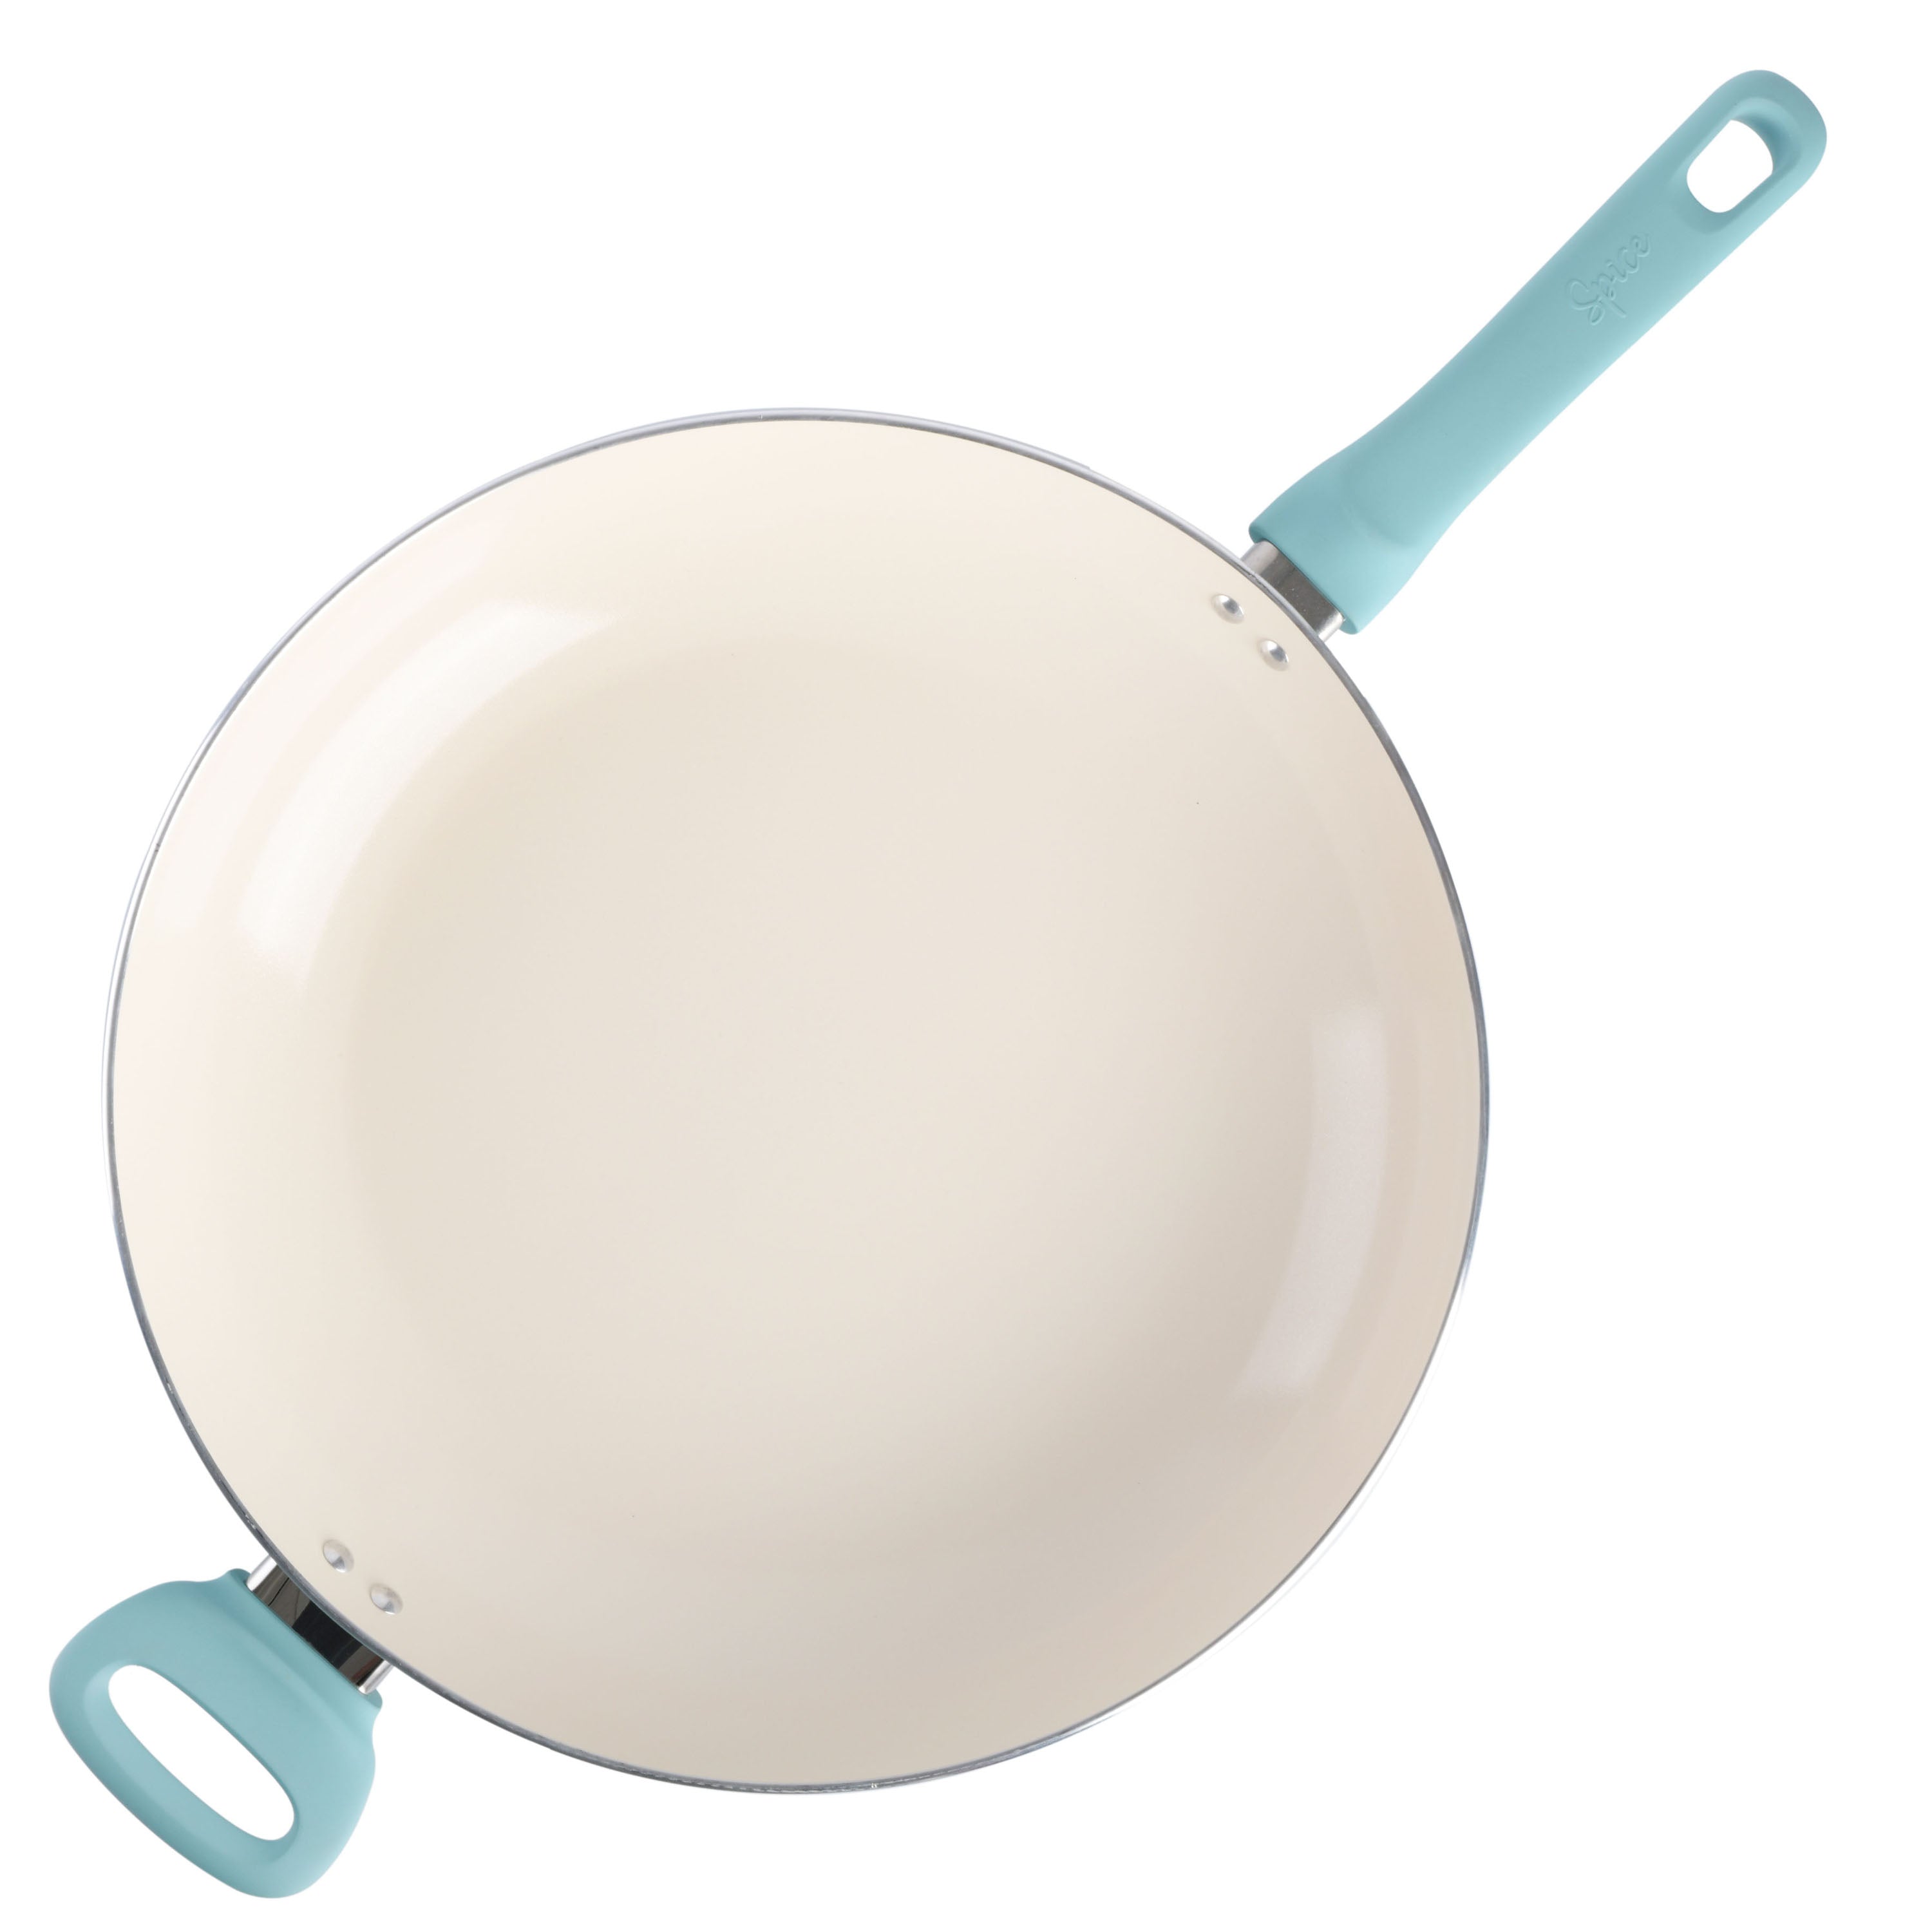 Circle Pan, Ceramic Non-Stick & Non-Toxic